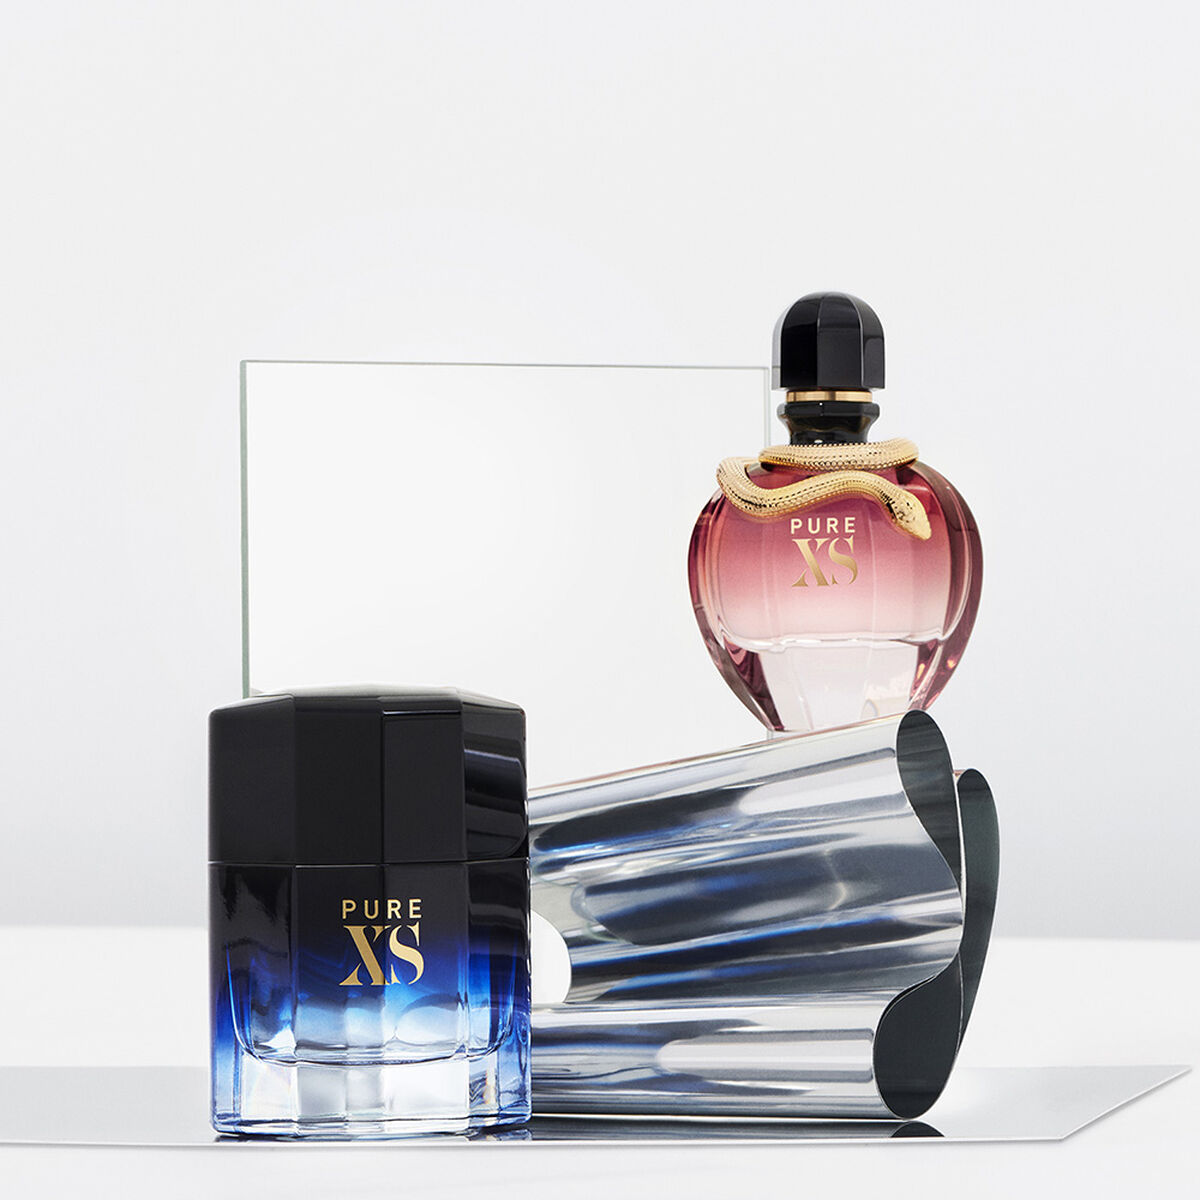 Perfume Paco Rabanne Pure XS For Her EDP 30 ml